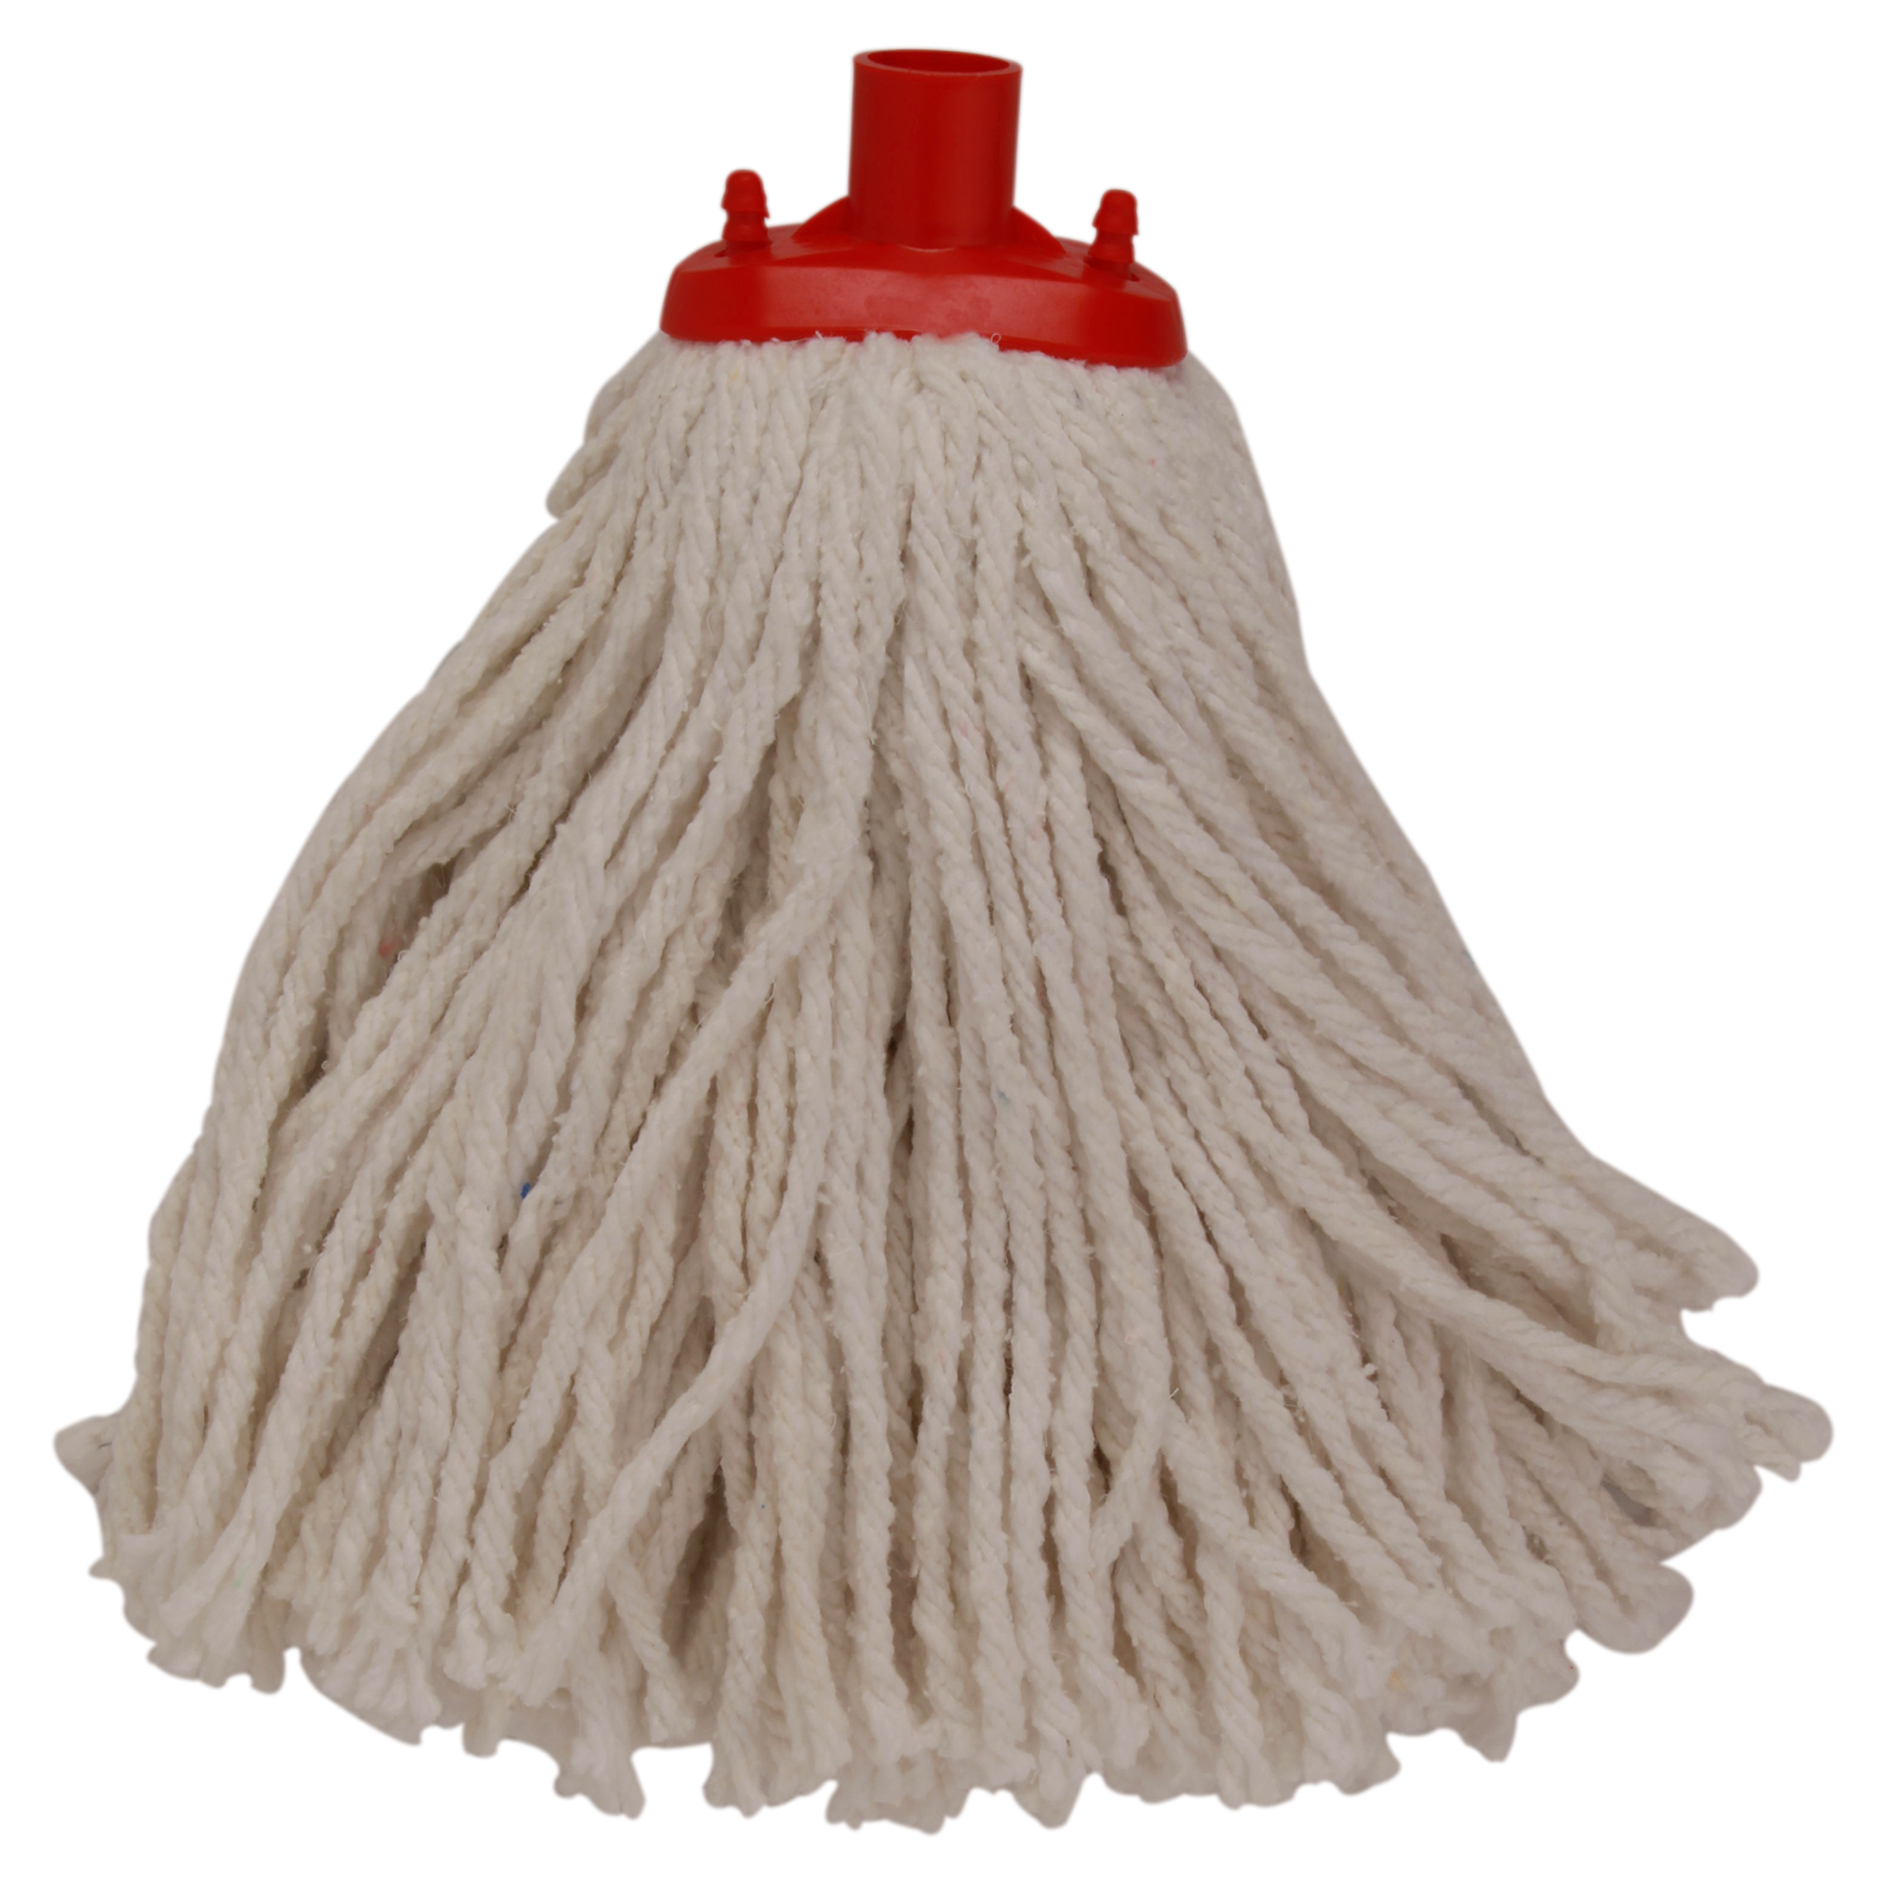 Household cotton yarn mop 300 gr